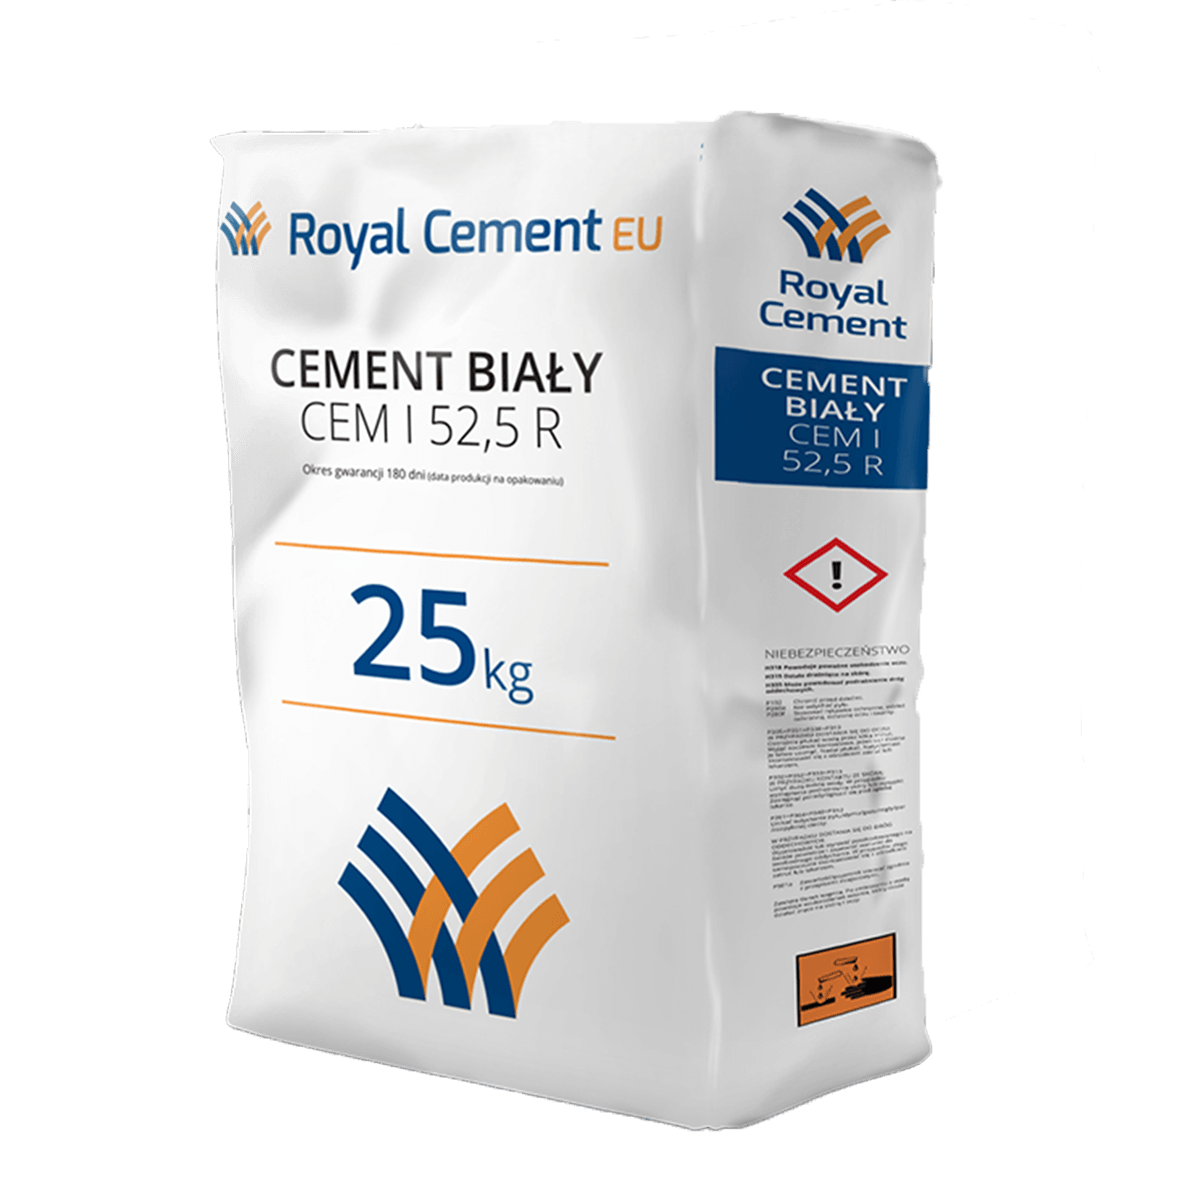 Royal Cement 52,5R Biały